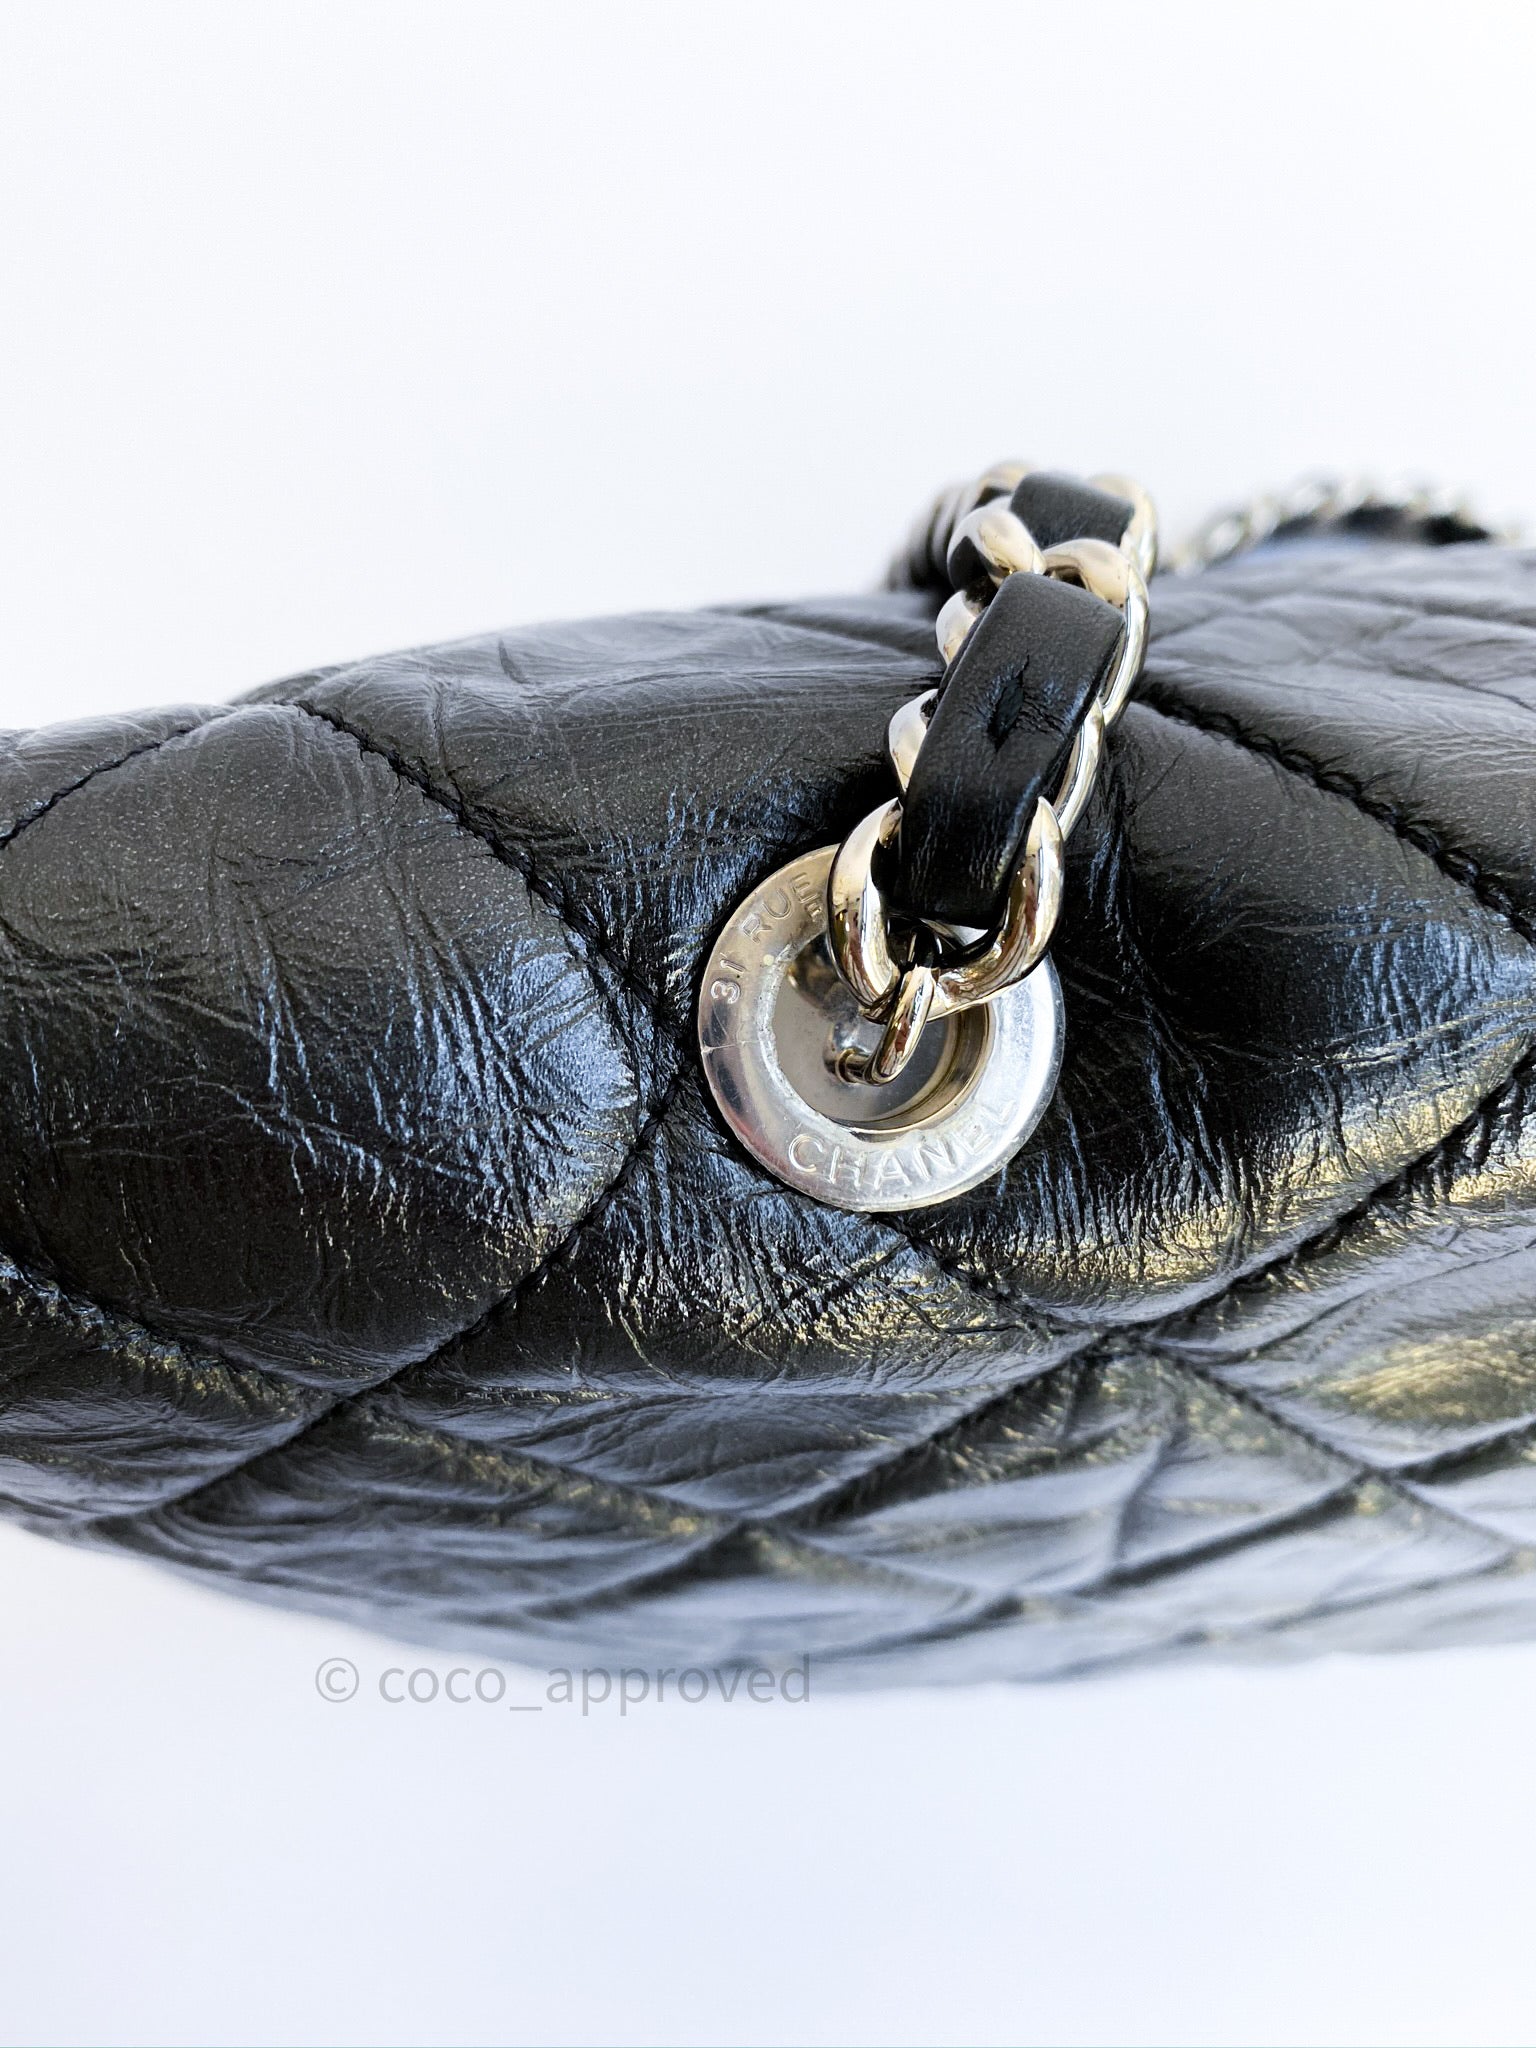 Chanel Shopping Bag Calfskin & Gold-tone Metal - Black